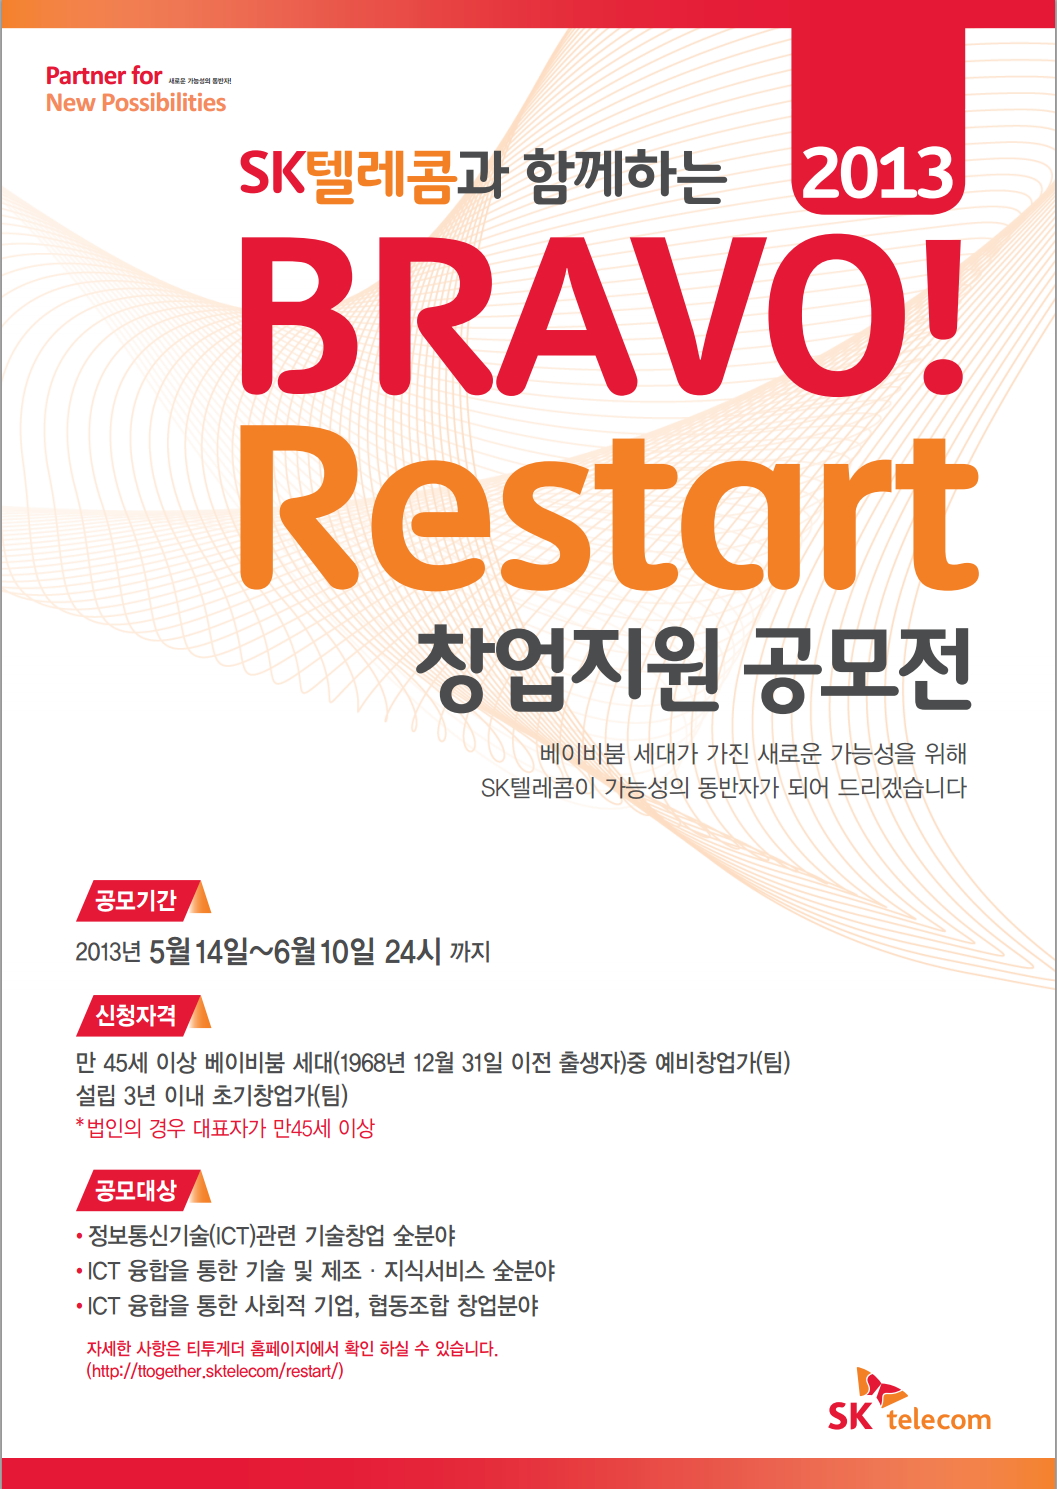 Bravo Restart